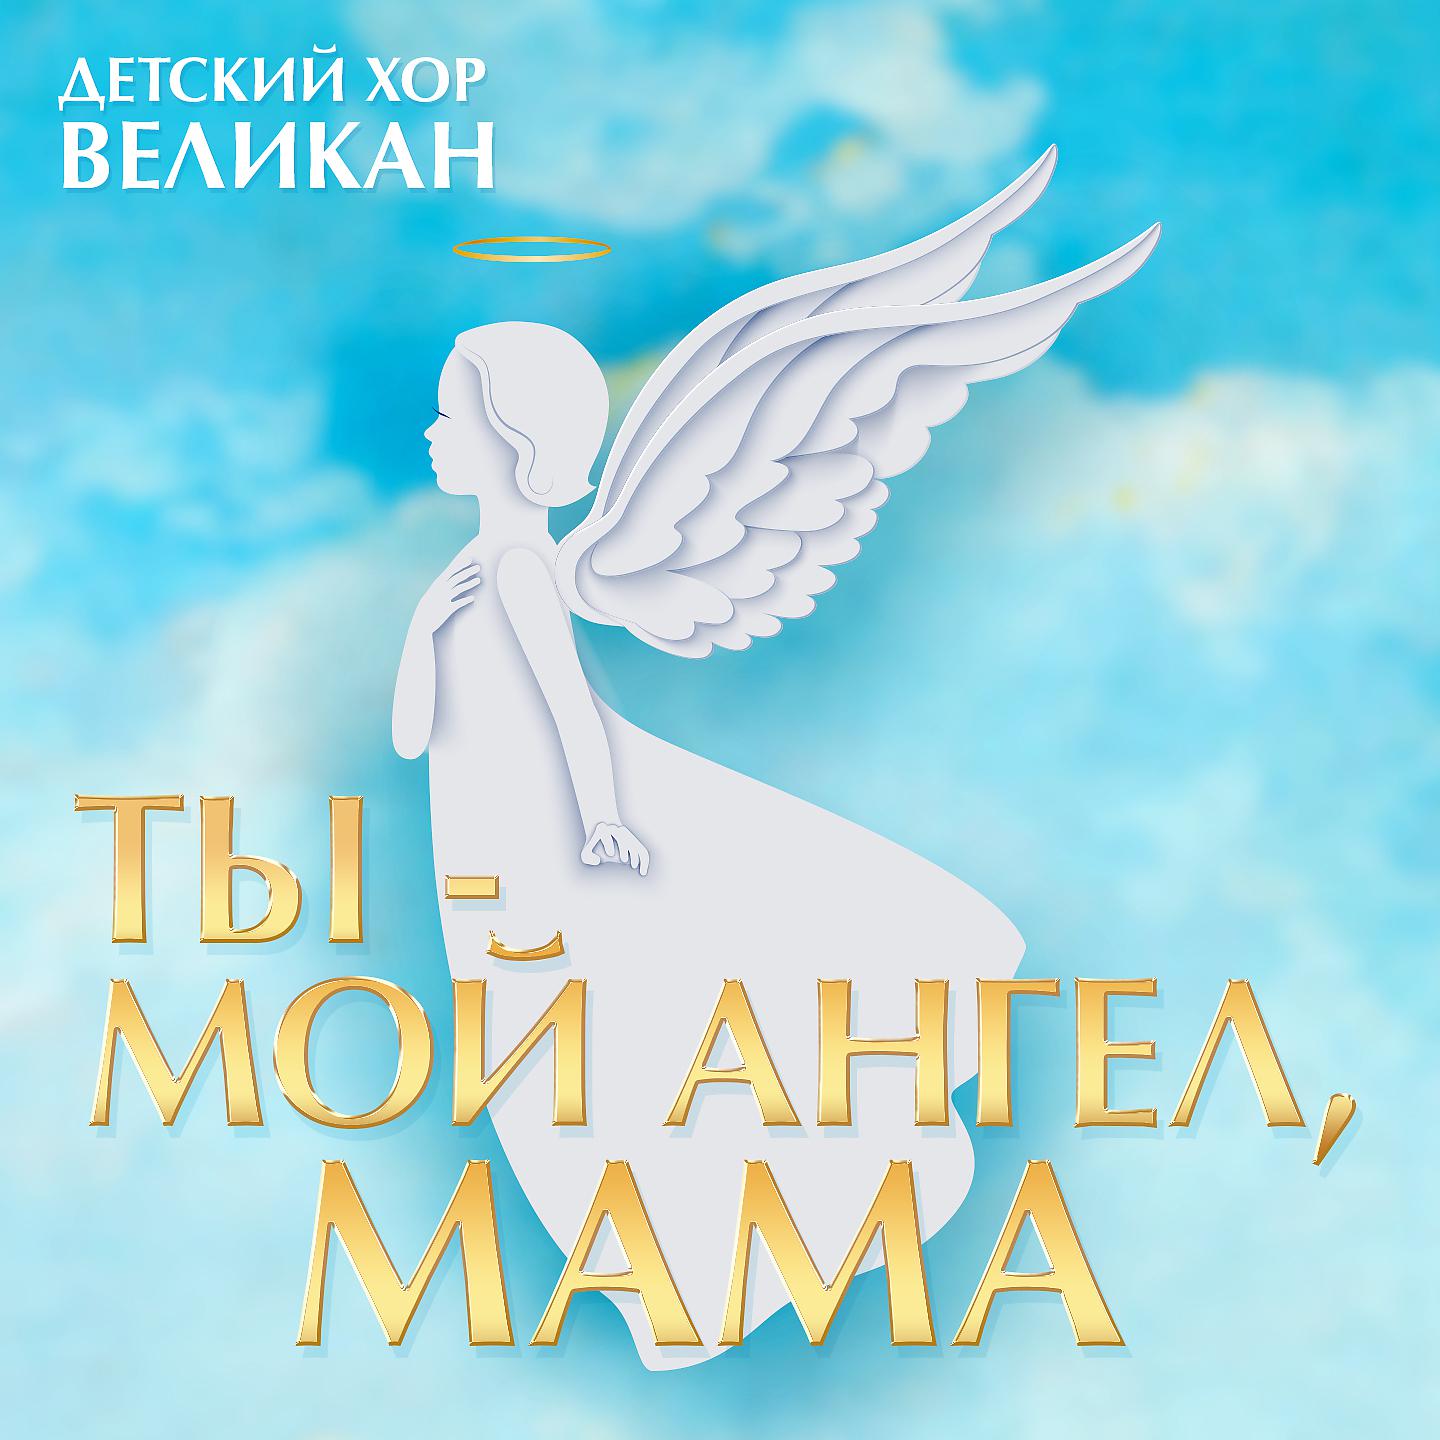 Видео ангела мамы. Ты мой ангел мама великан. Мама мой ангел. Детский хор великан мамочка. Мамочка мой ангел.